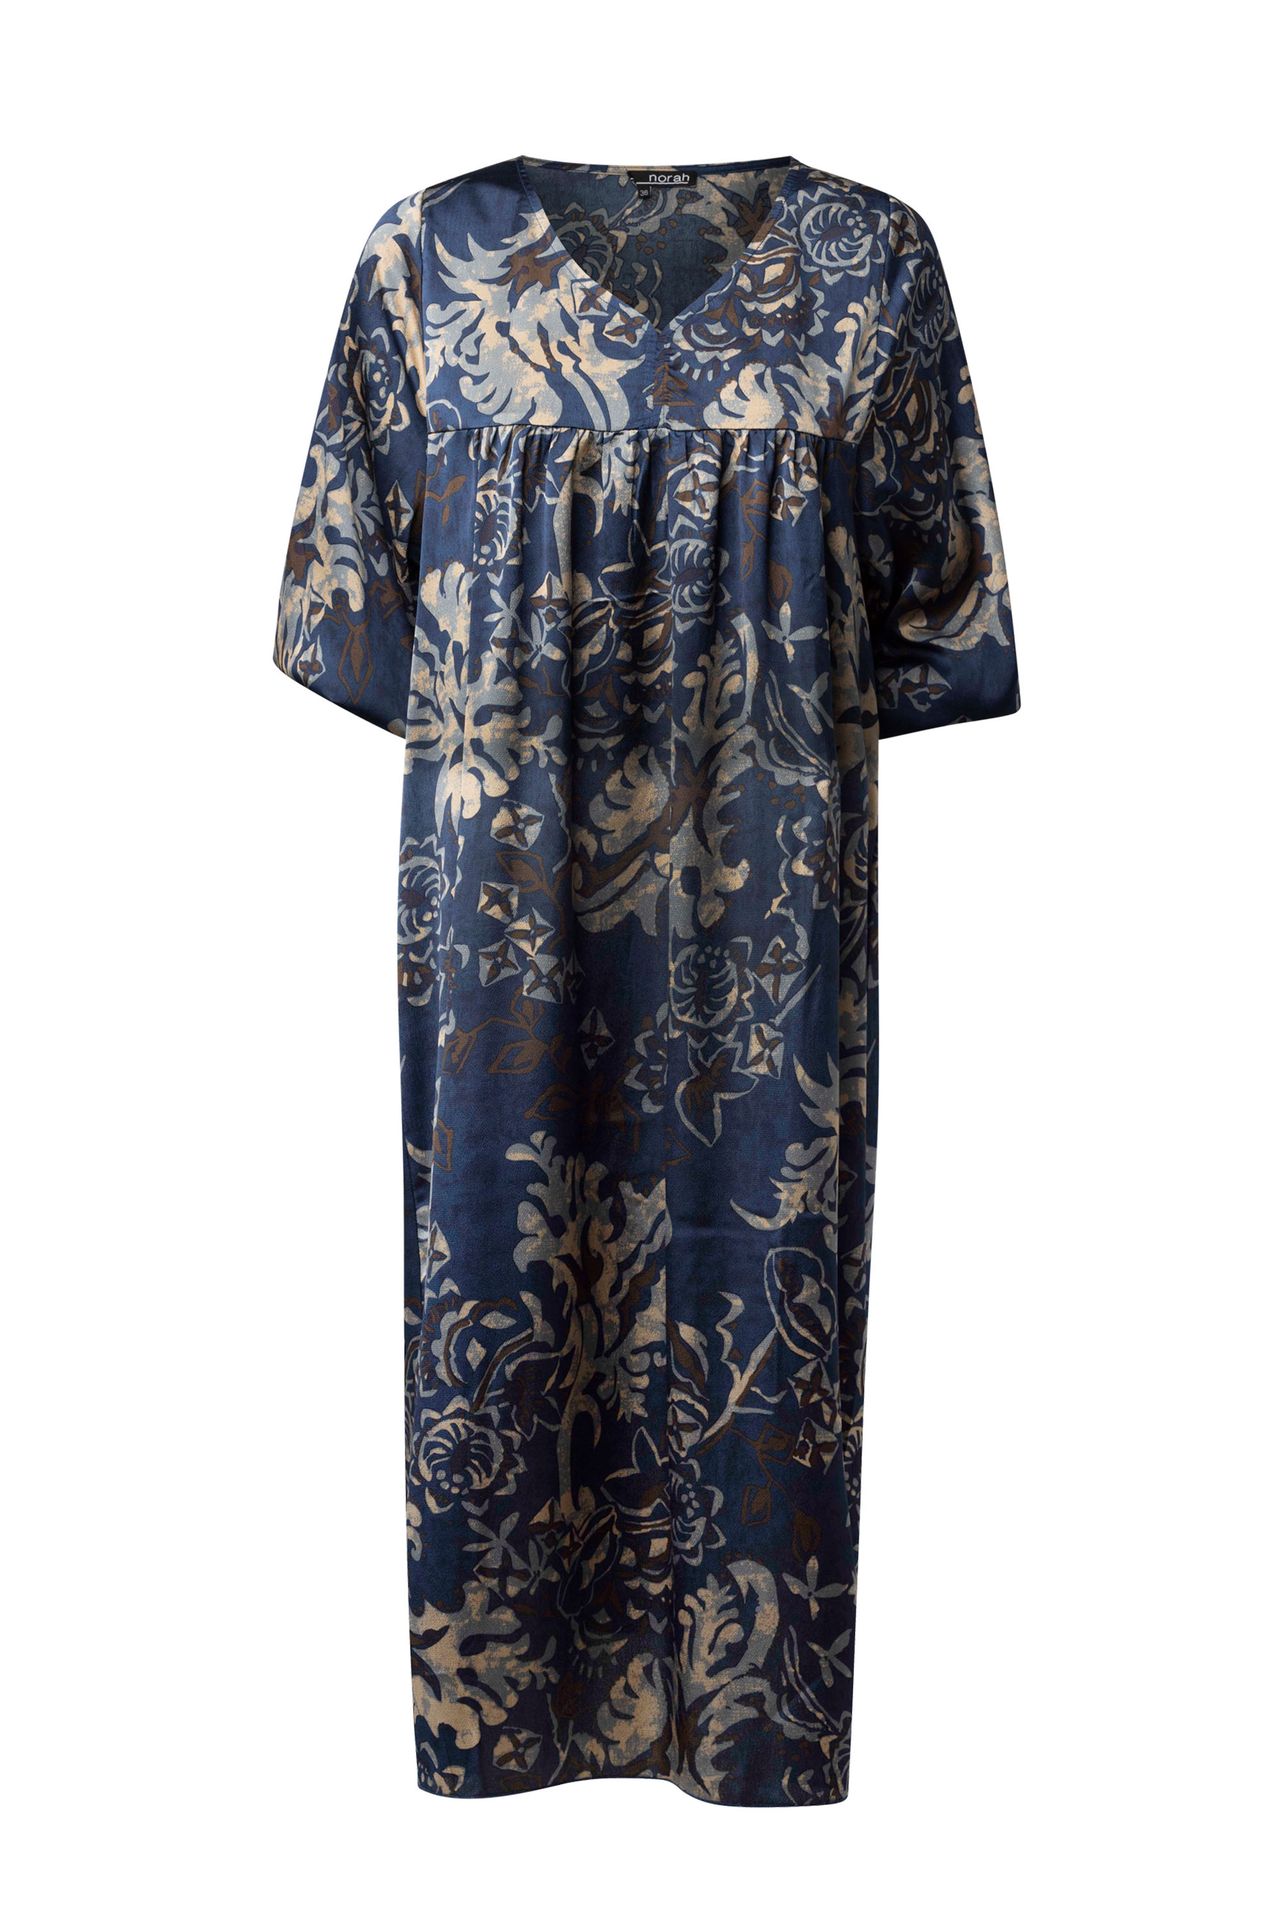 Norah Blauwe maxi jurk blue multicolor 214272-420